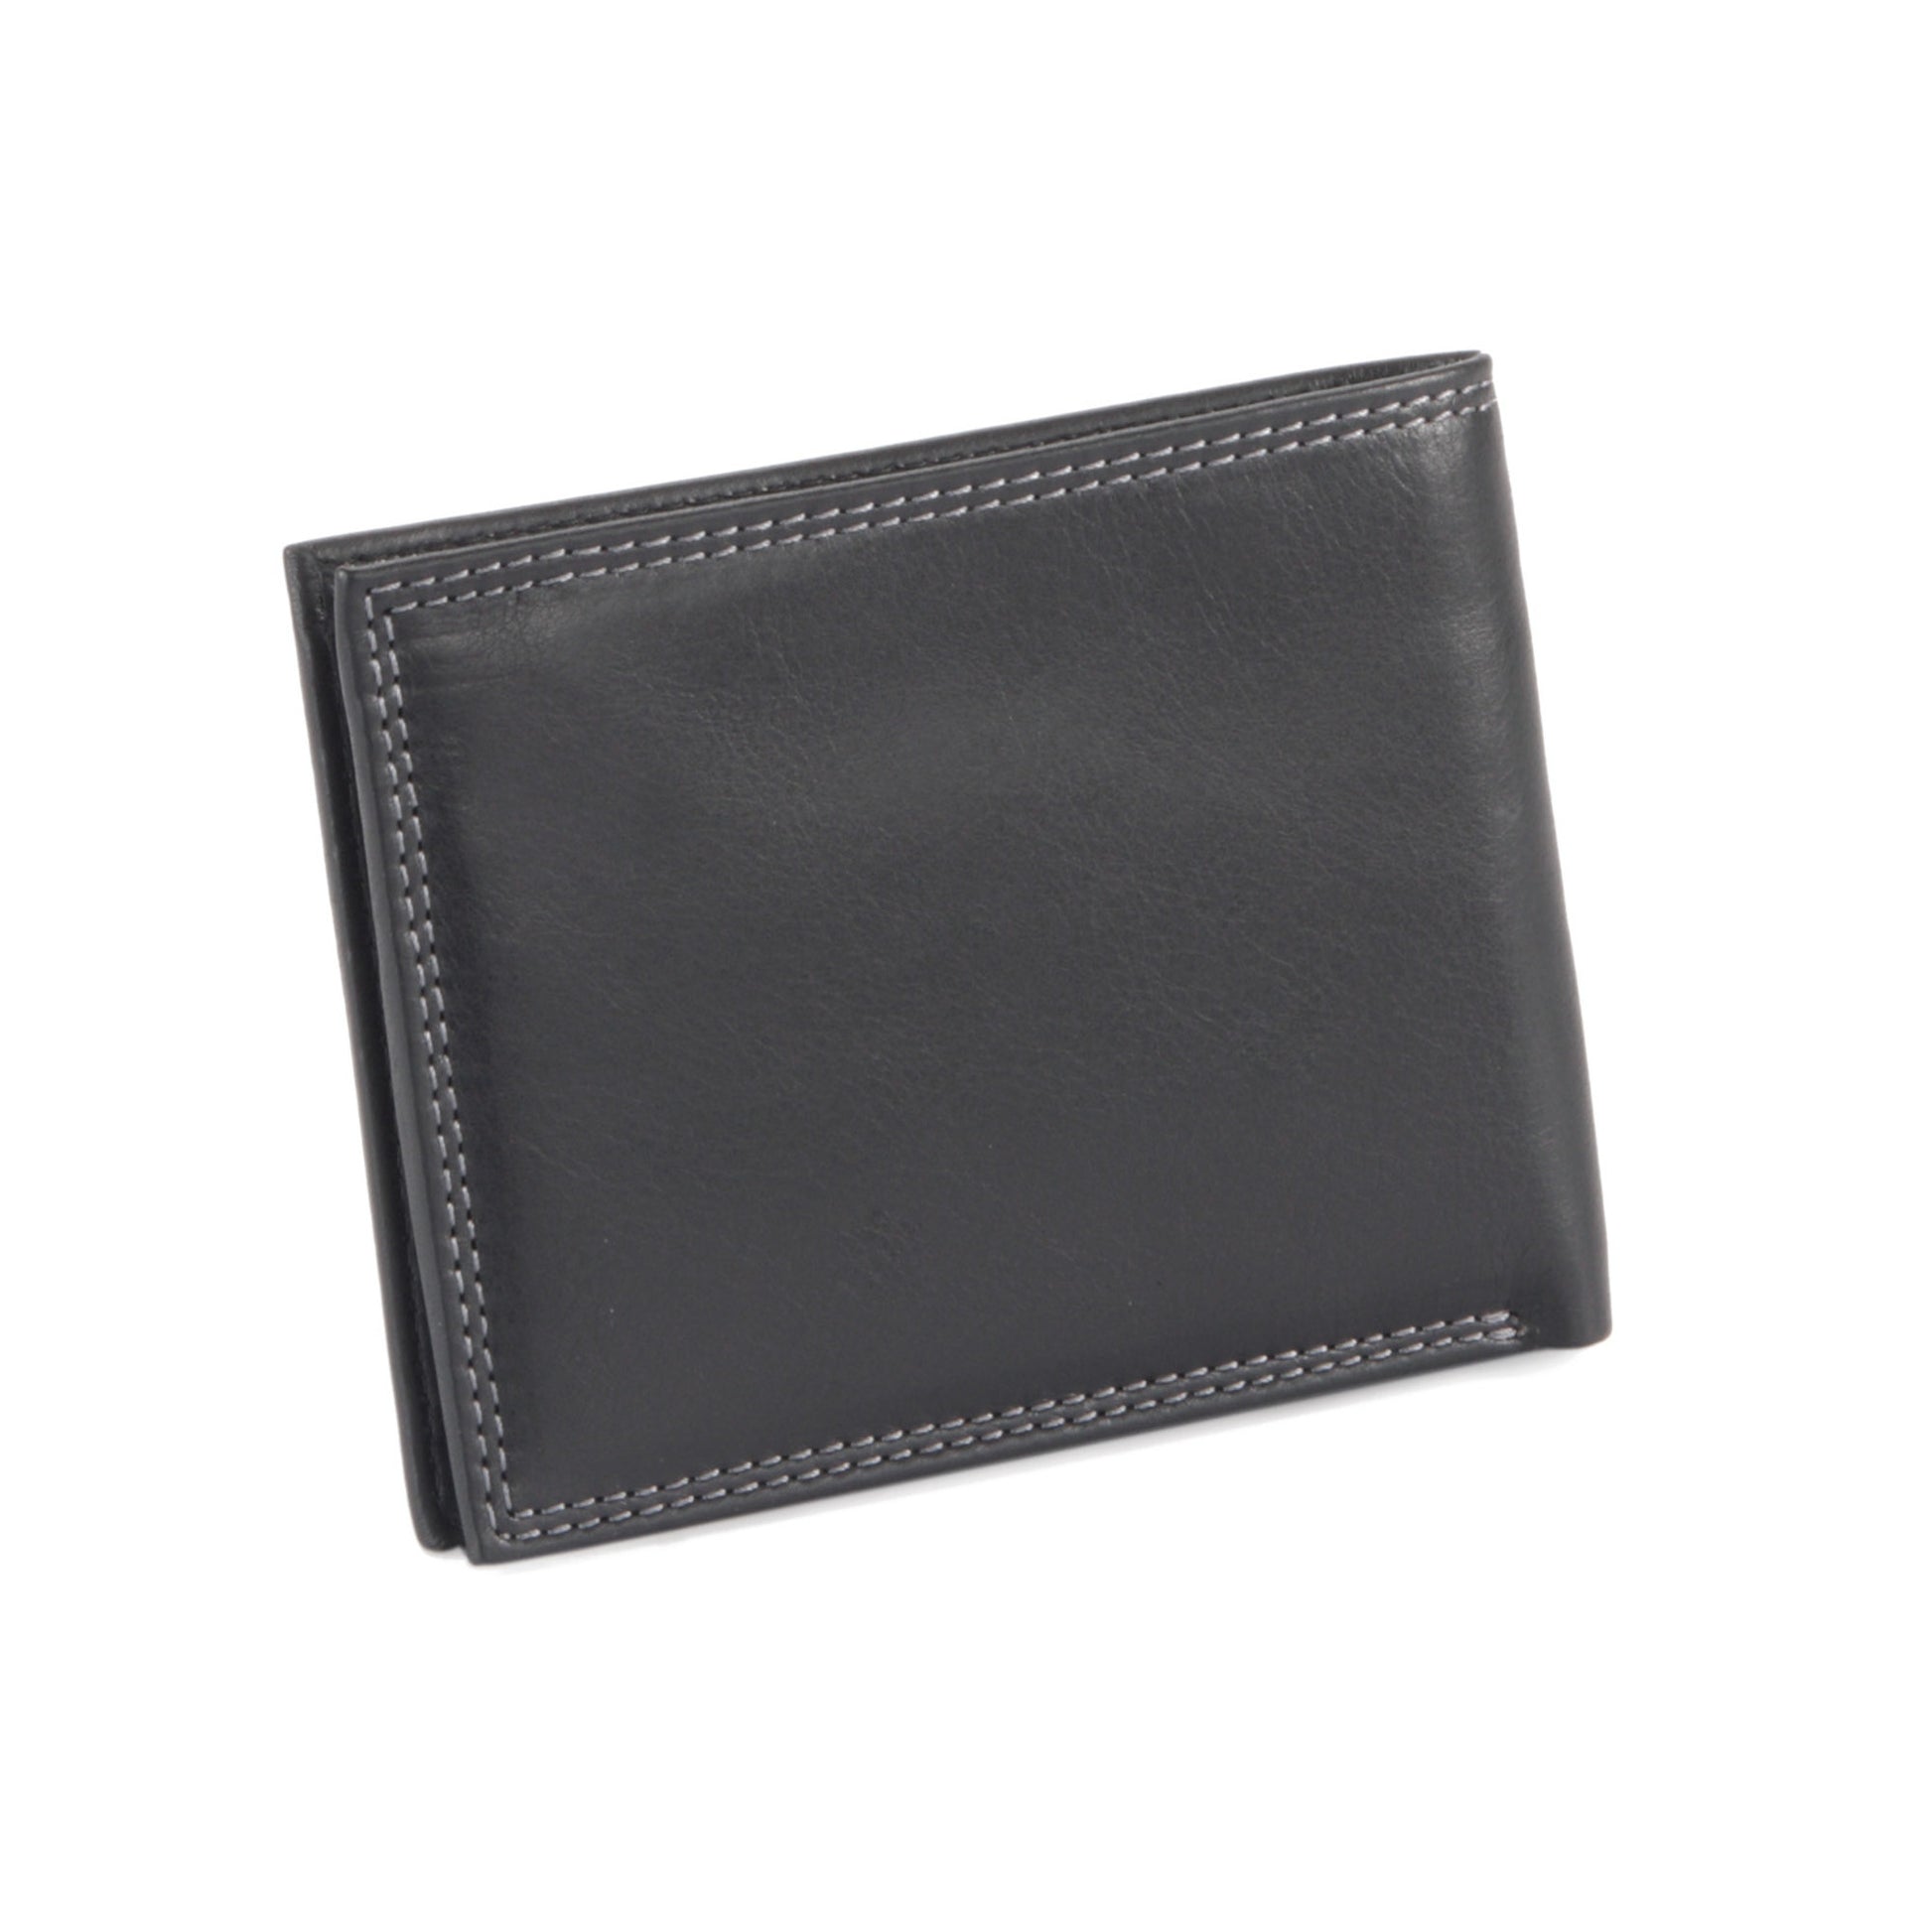 Style n Craft 300720-BL Slim bi-fold wallet in black top grain leather - closed back view